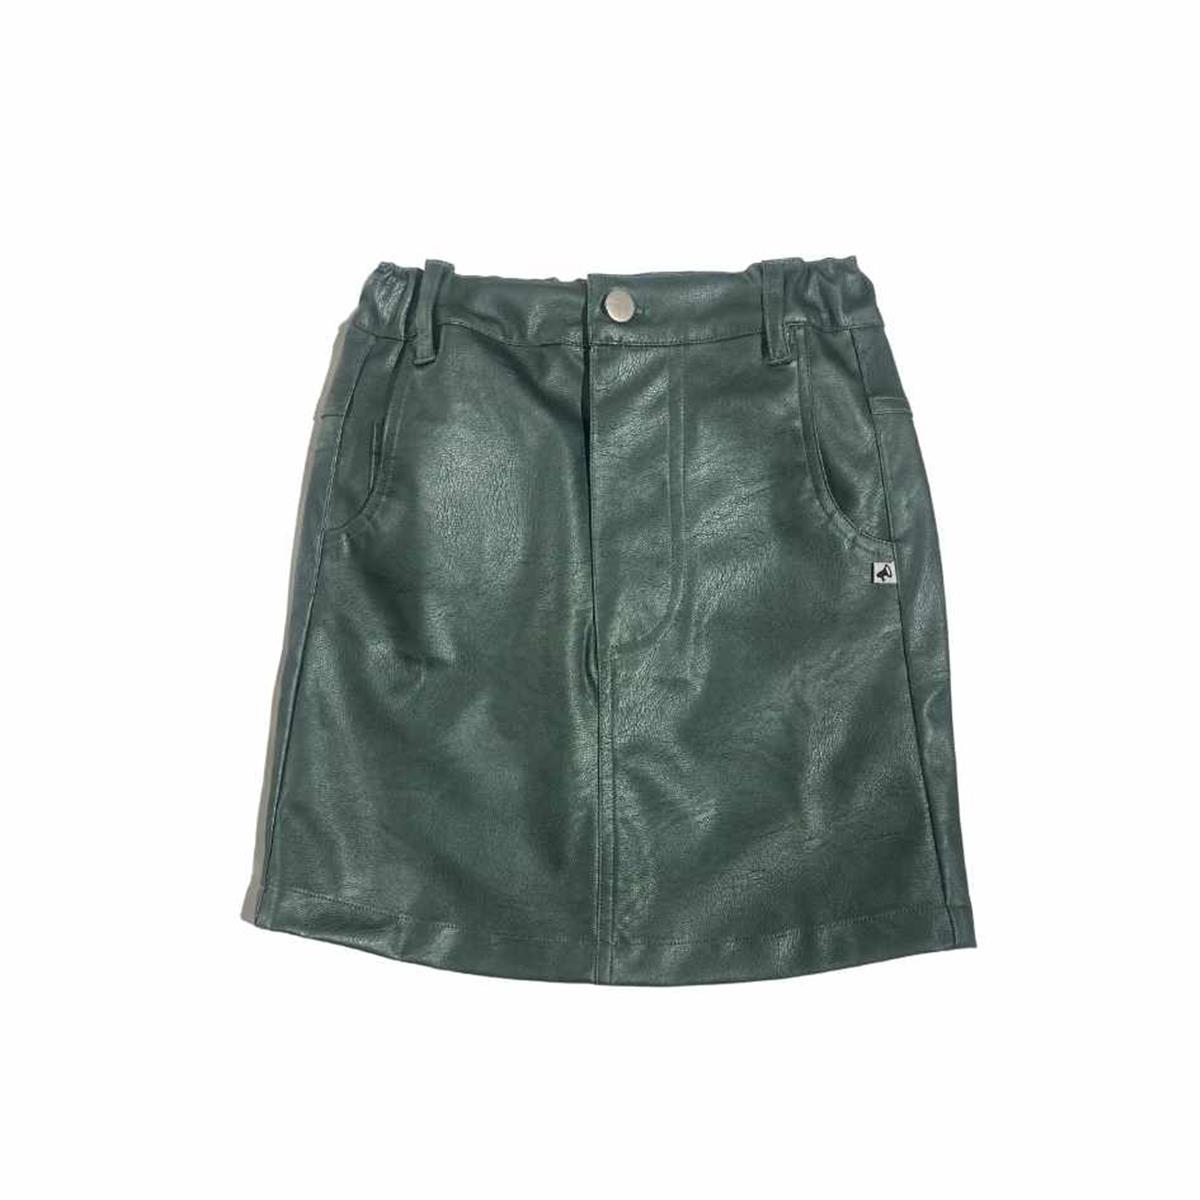 COS I SAID SO - Vegan Leather skirt